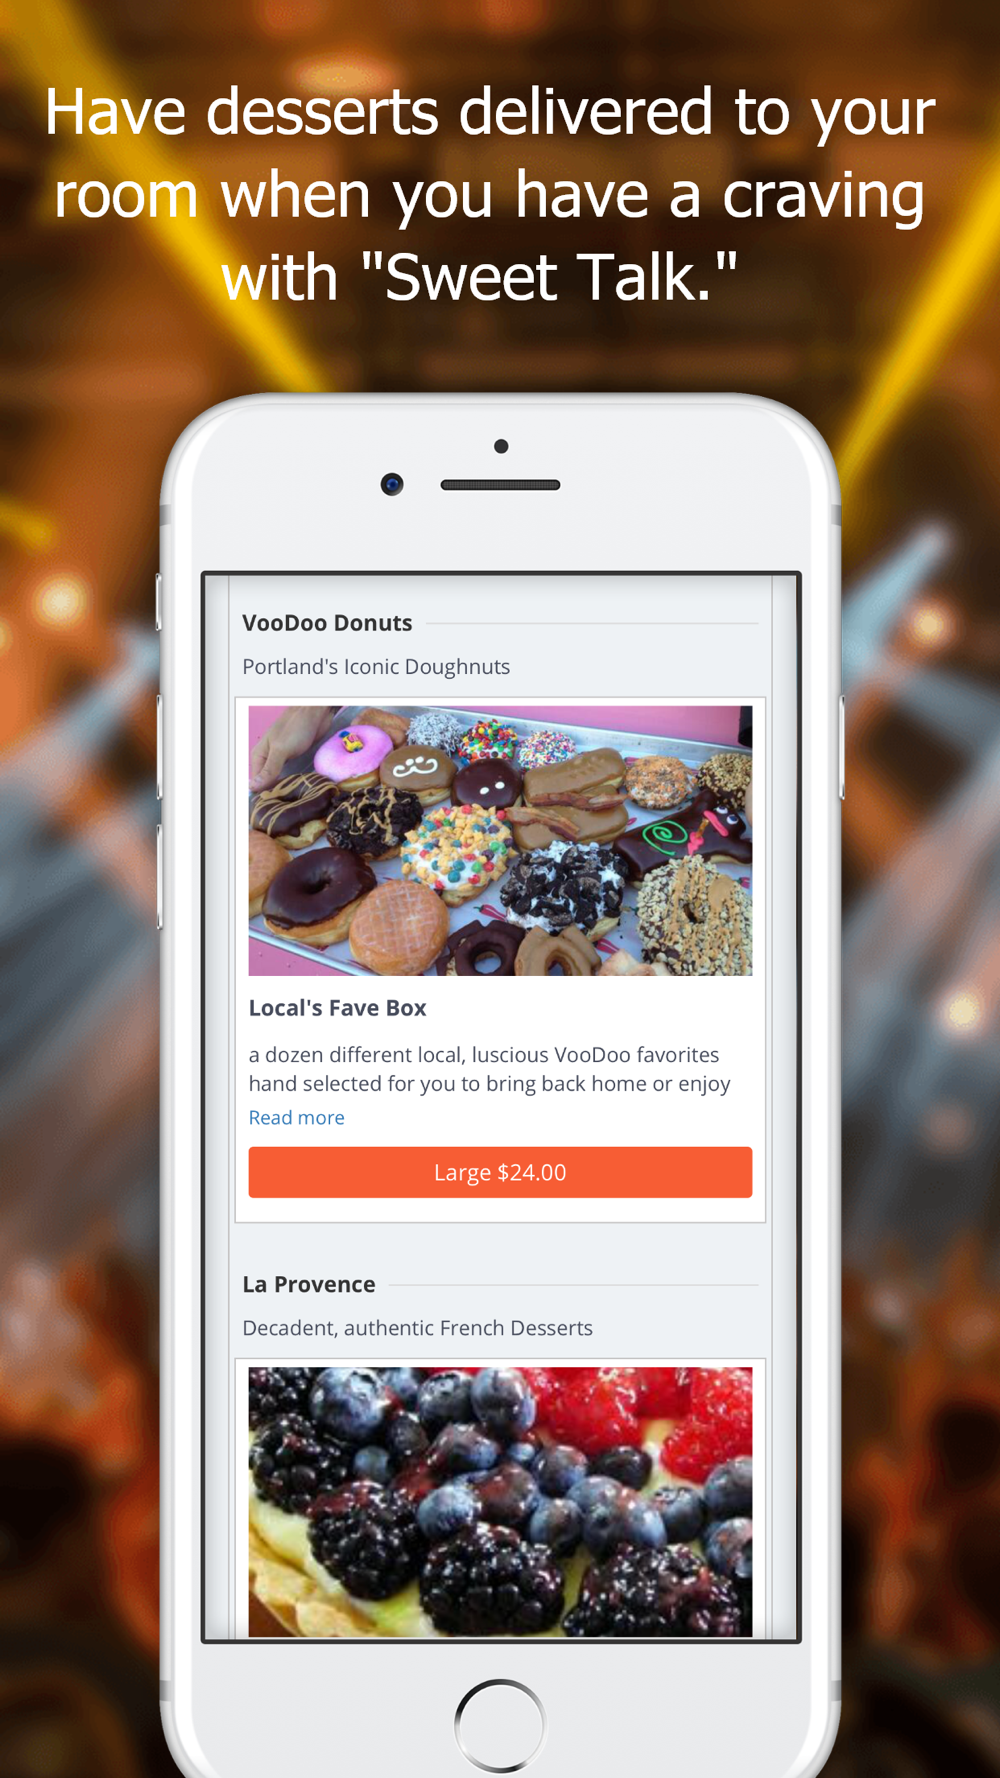 Grand Hotel Bridgeport Free Download App For Iphone Steprimo Com